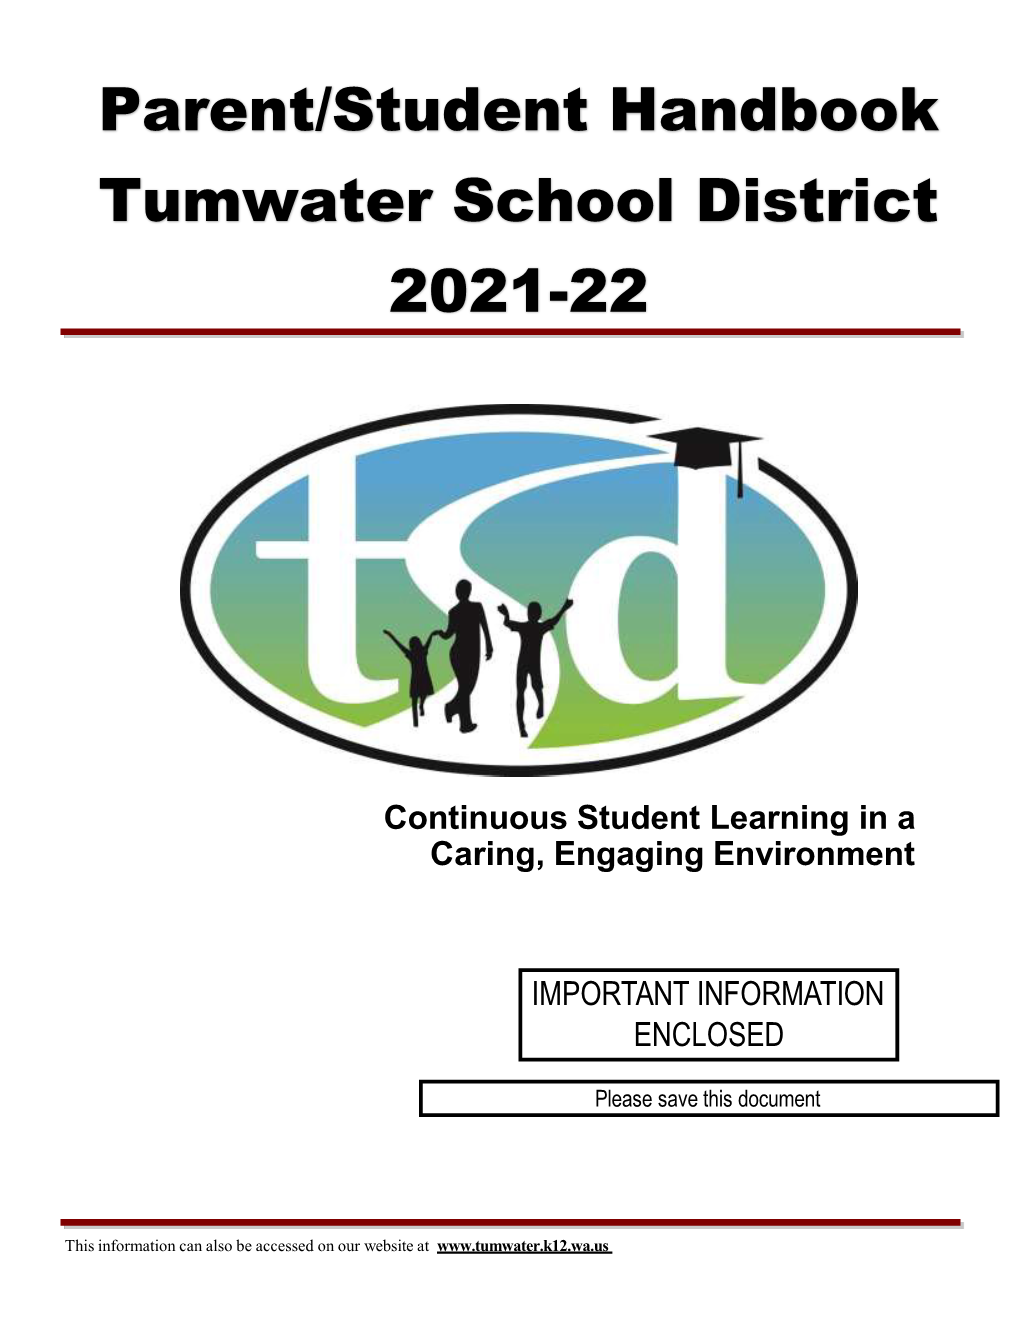 Parent/Student Handbook Tumwater School District 2021-22